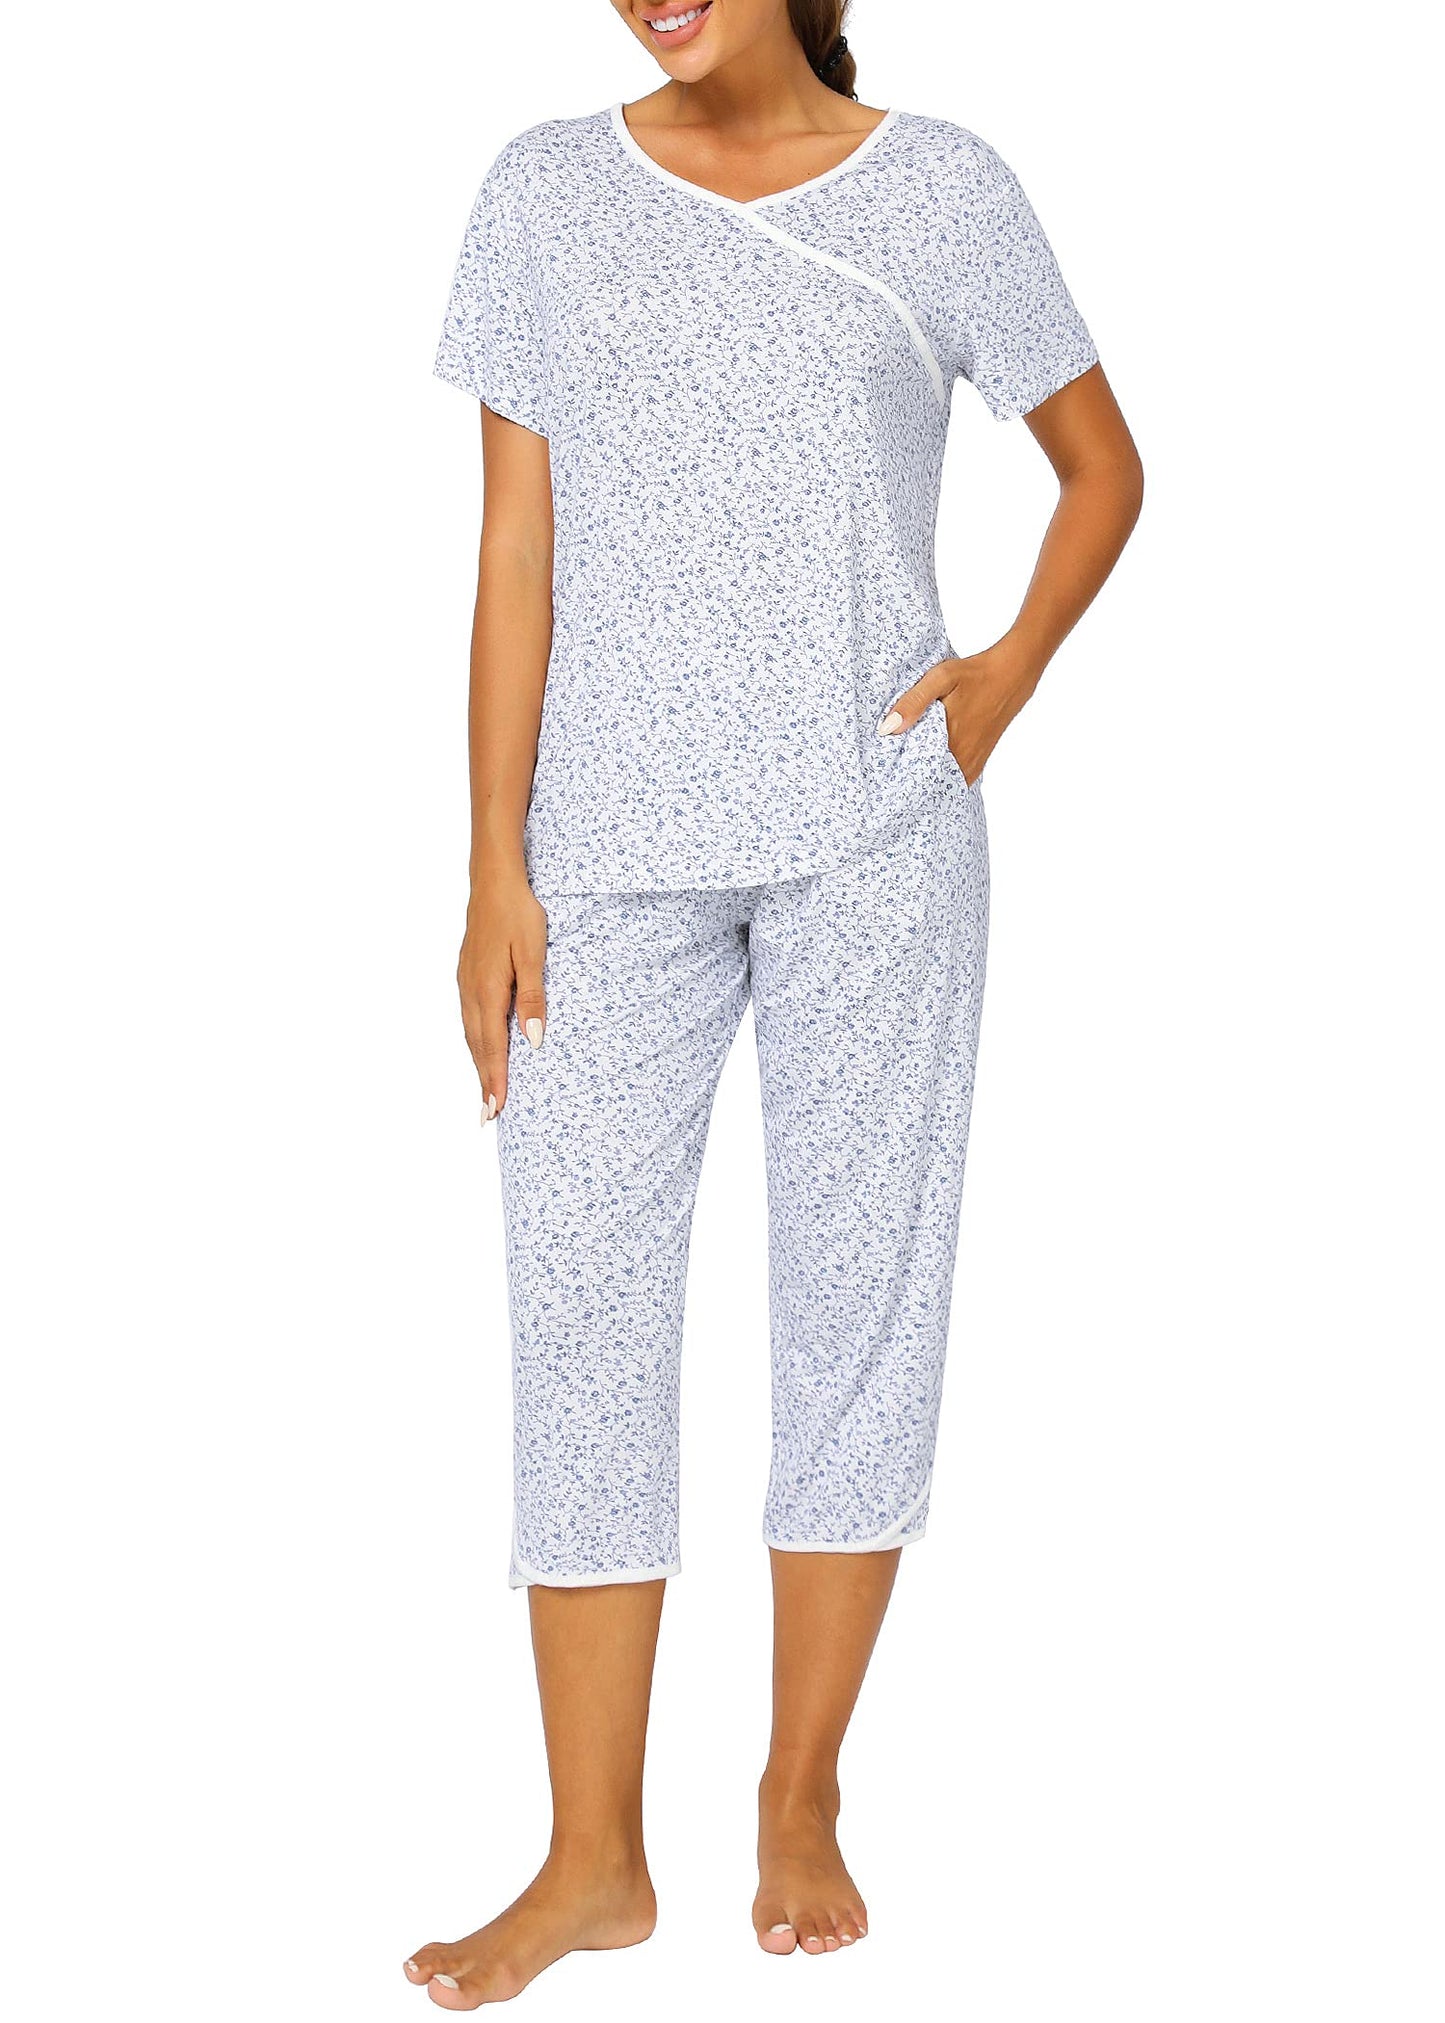 Women's Bamboo Viscose Floral Faux Wrap Top Capris Pajama Set - Latuza